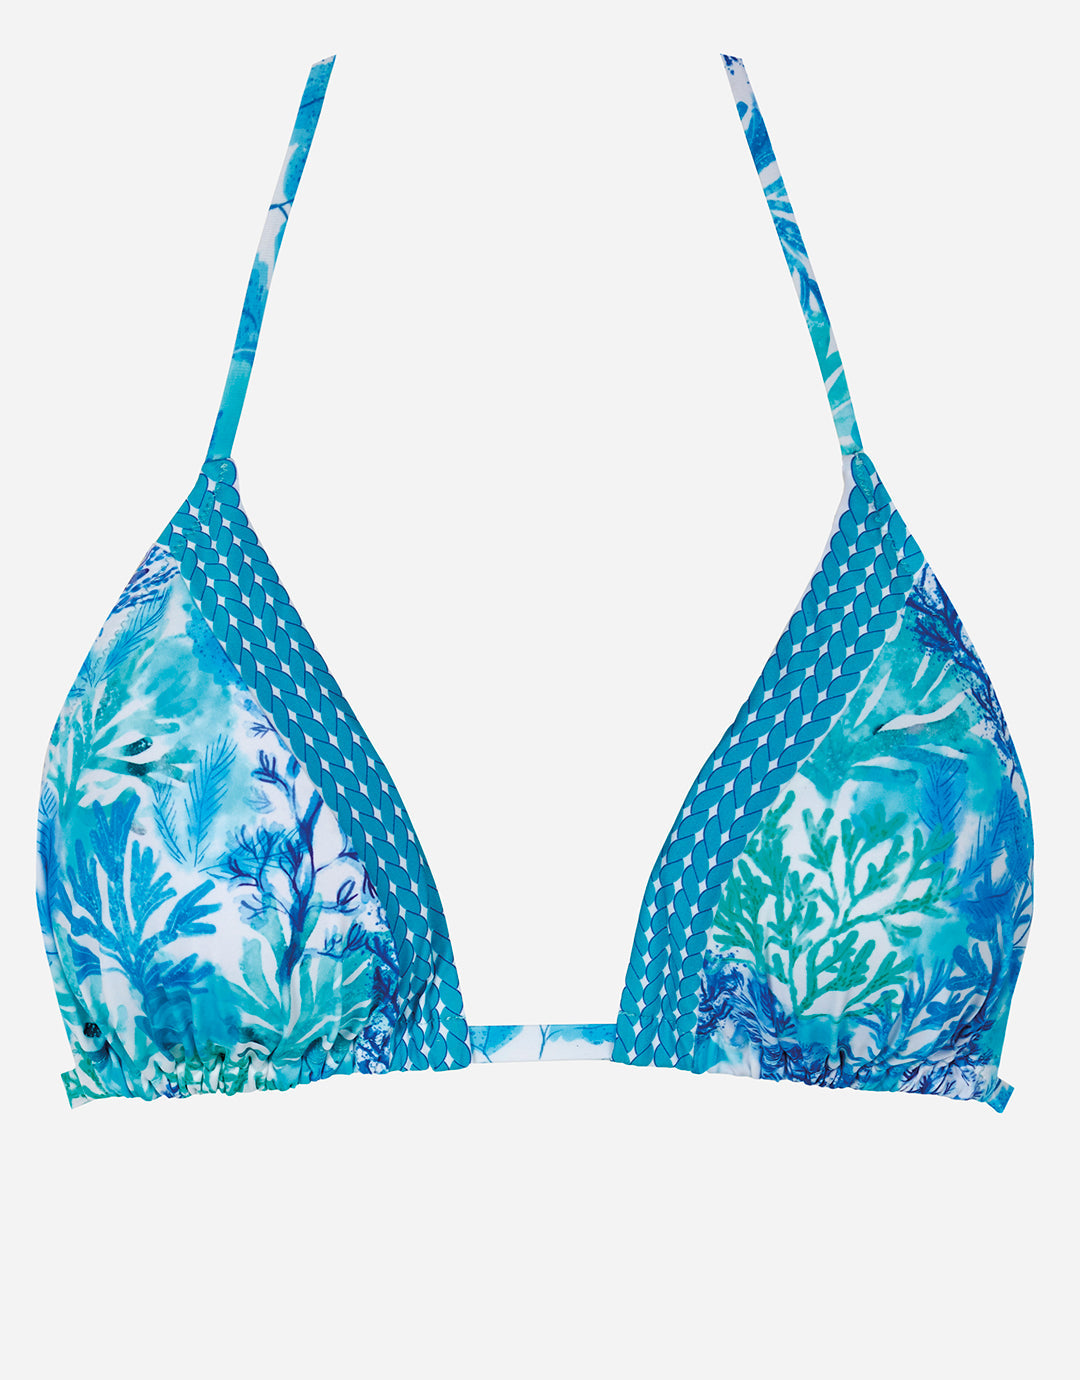 Coral Triangle Bikini Top - Turquoise - Simply Beach UK